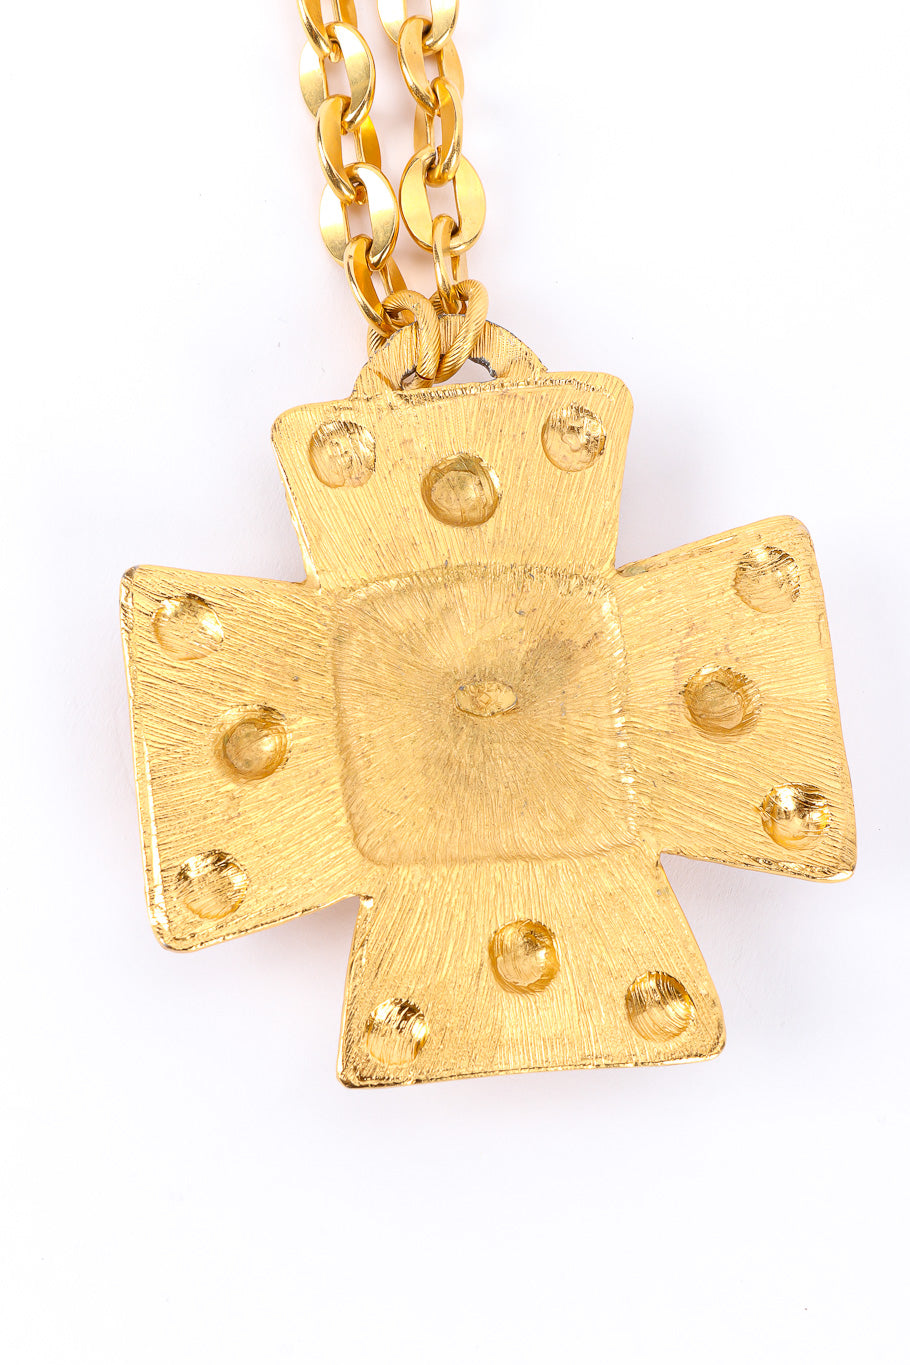 Vintage Robert Rose Byzantine Maltese Cross Necklace back side of pendant and signature cartouche closeup @Recessla